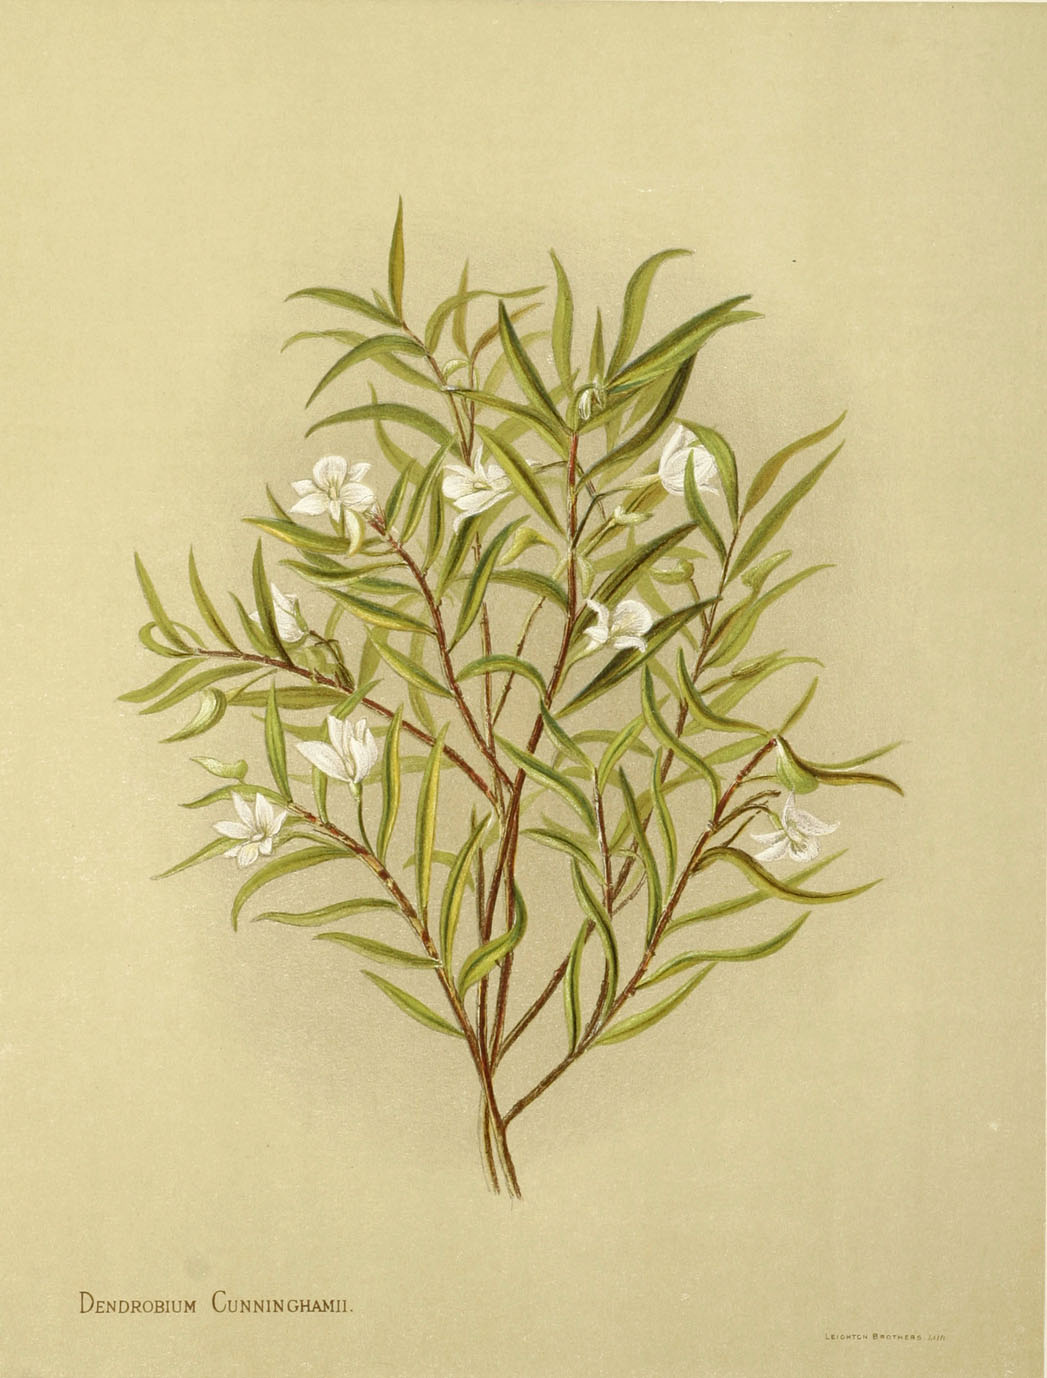 Dendrobium Cunninghamii - Antique Print from 1888